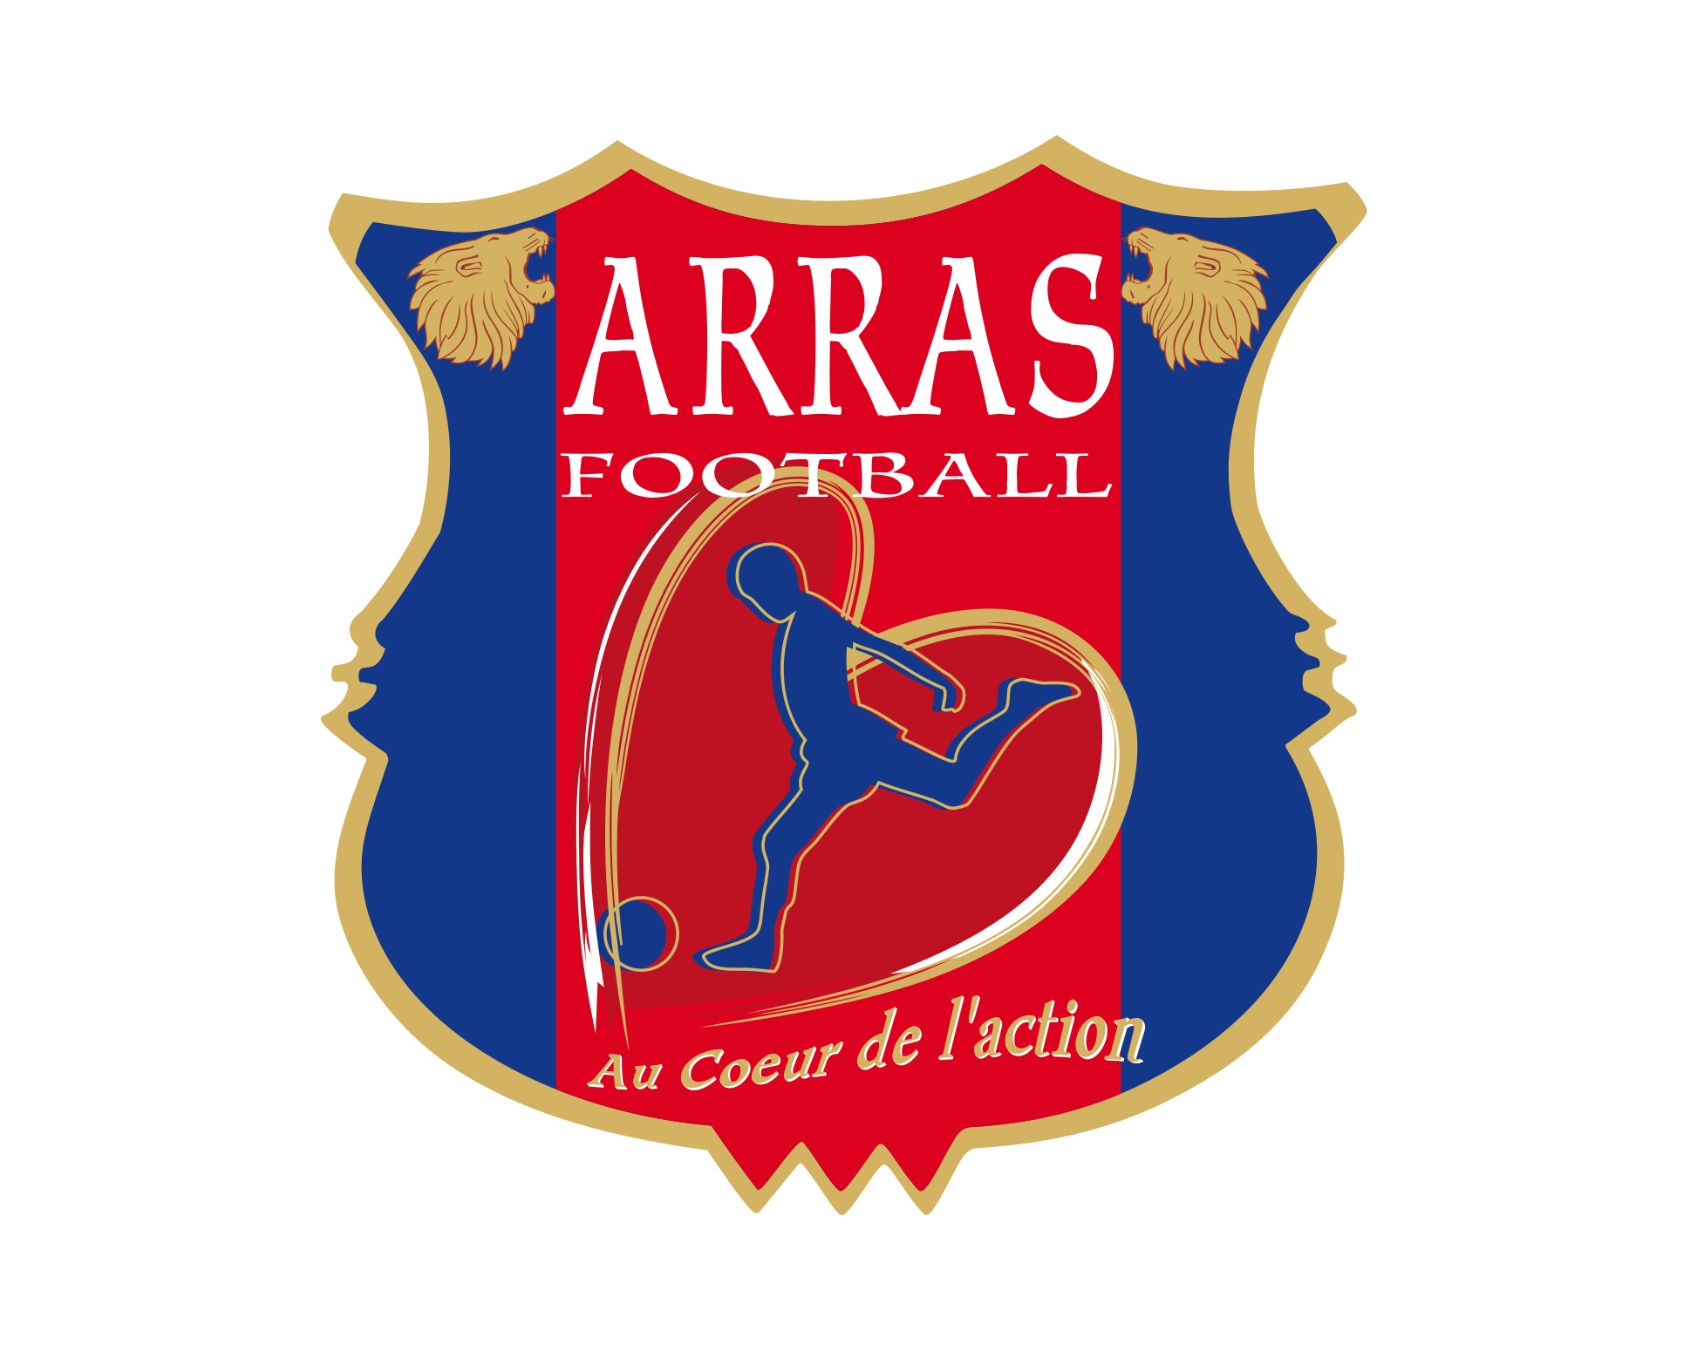 arras-football-13-football-club-facts